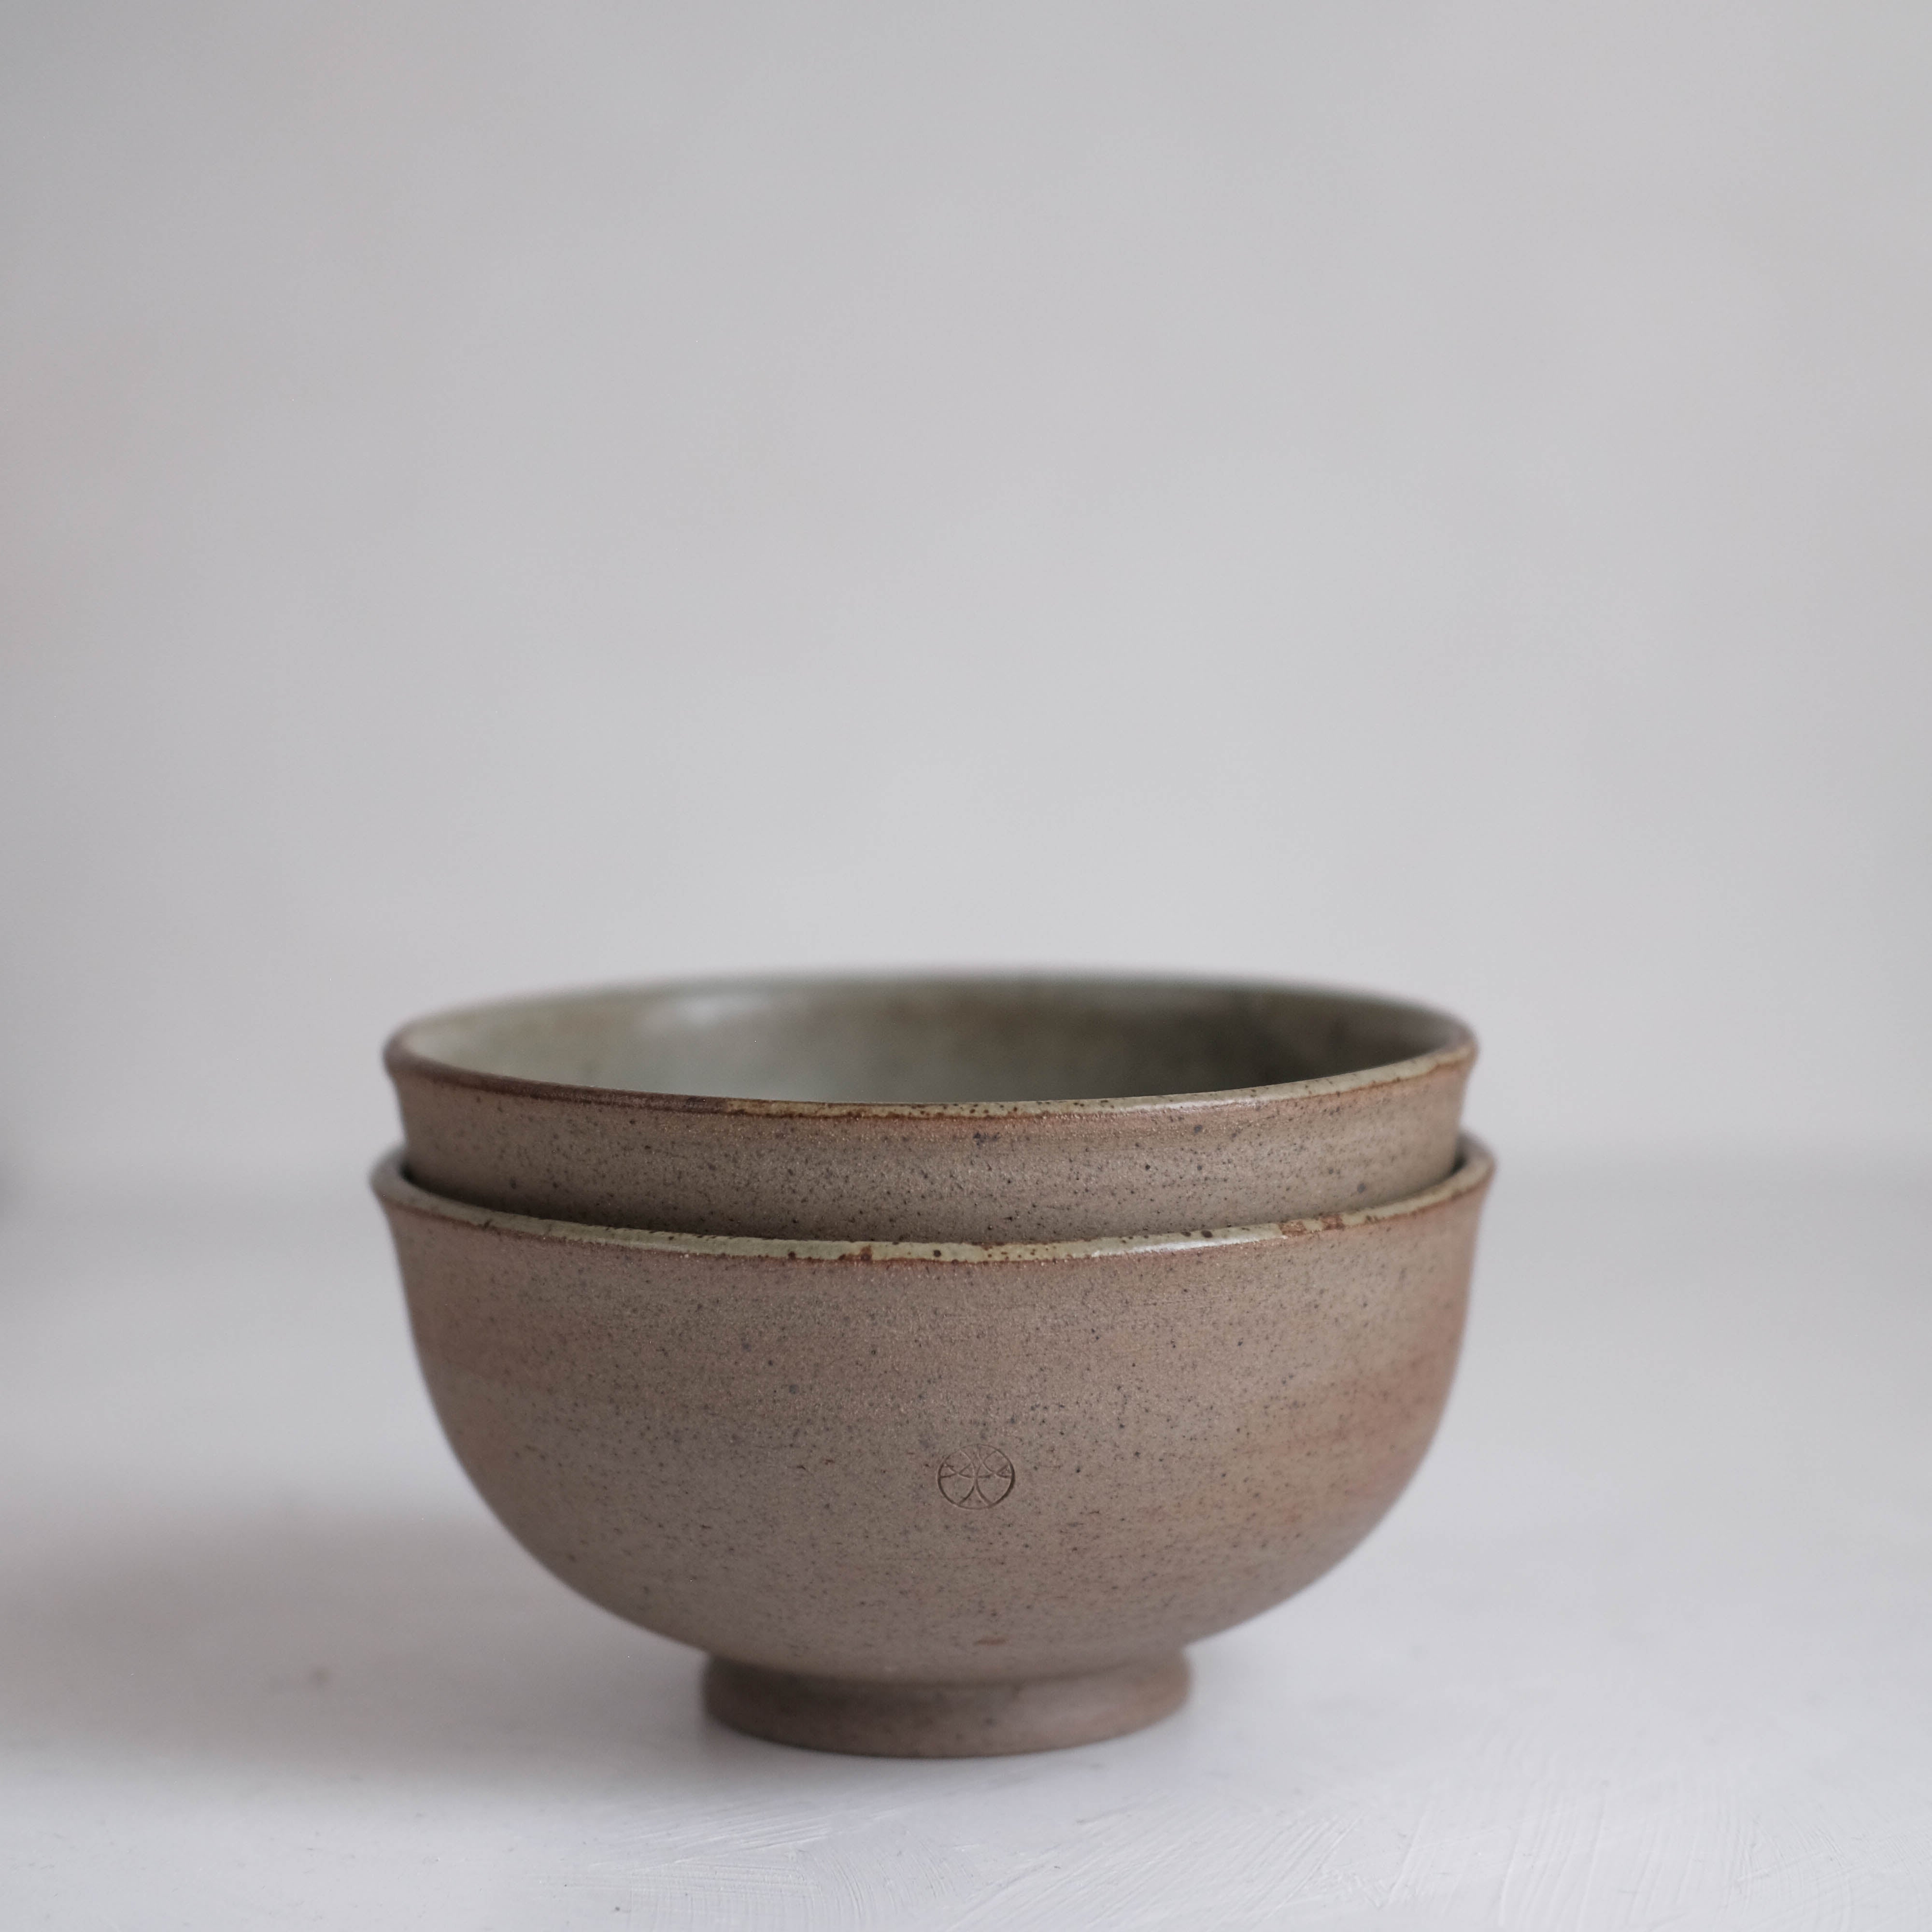 Haigusuri (灰釉) Bowl #ADN108 (Set of 2)